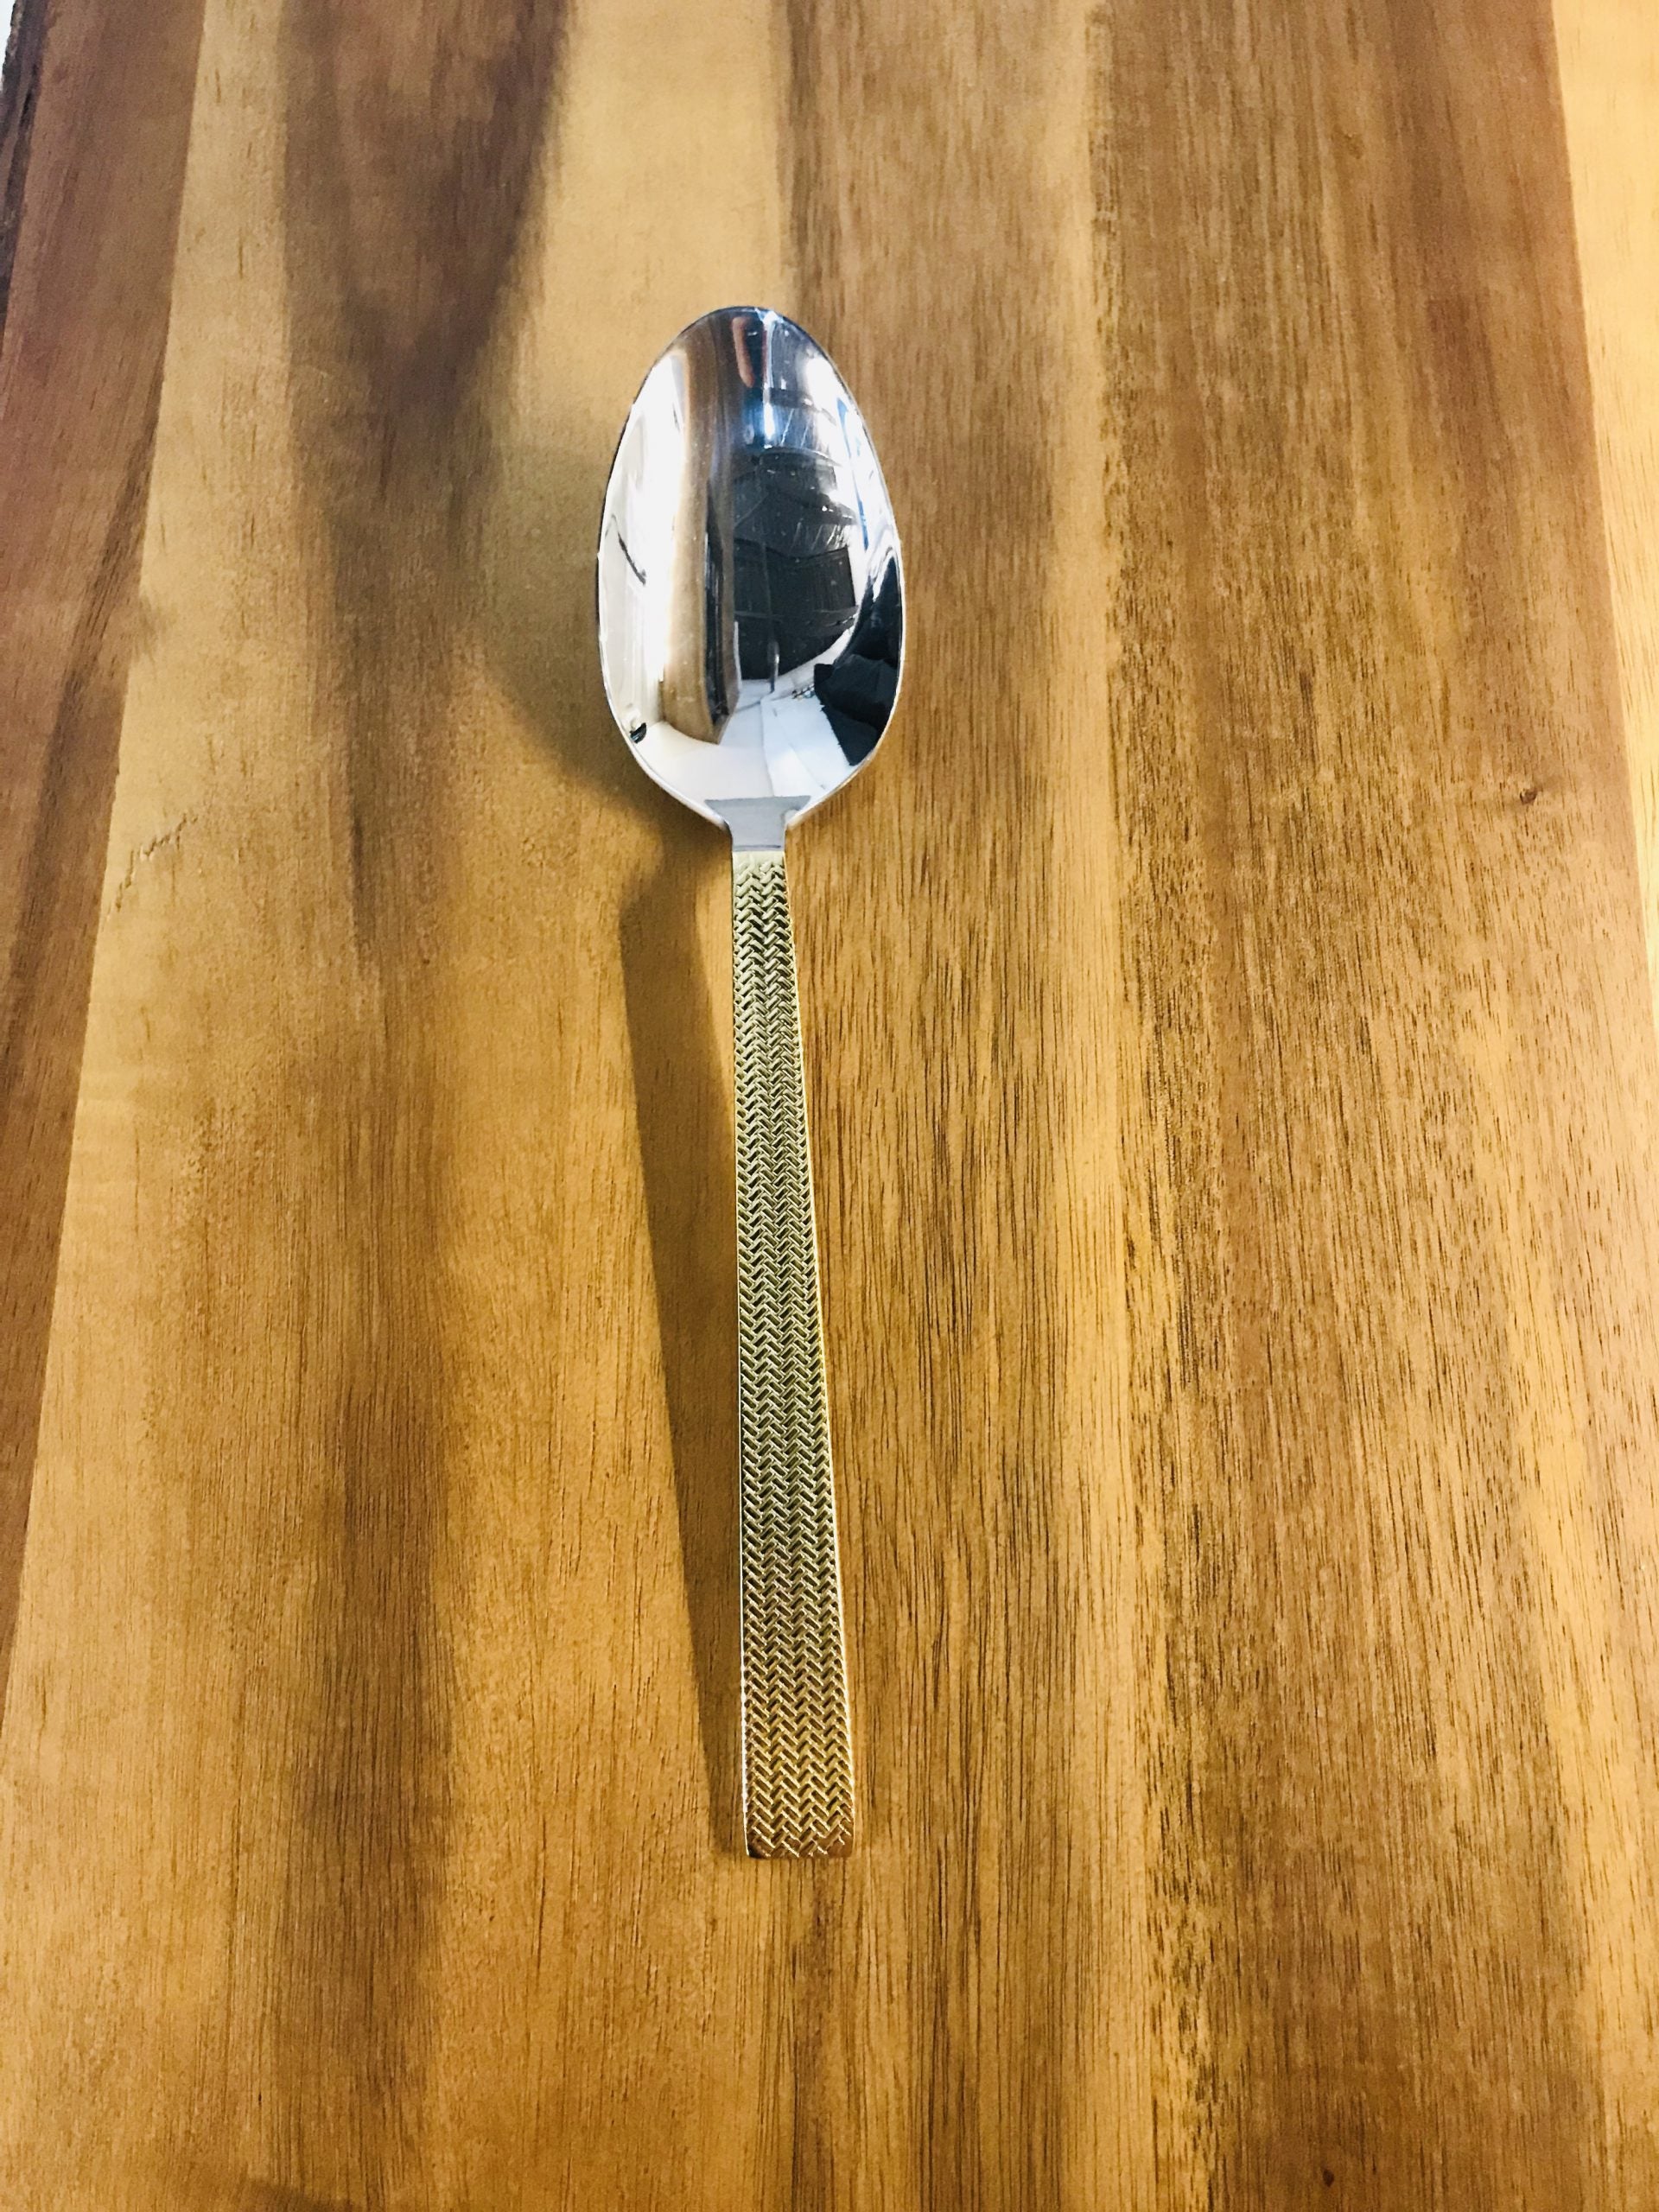 Gold handle soup spoon